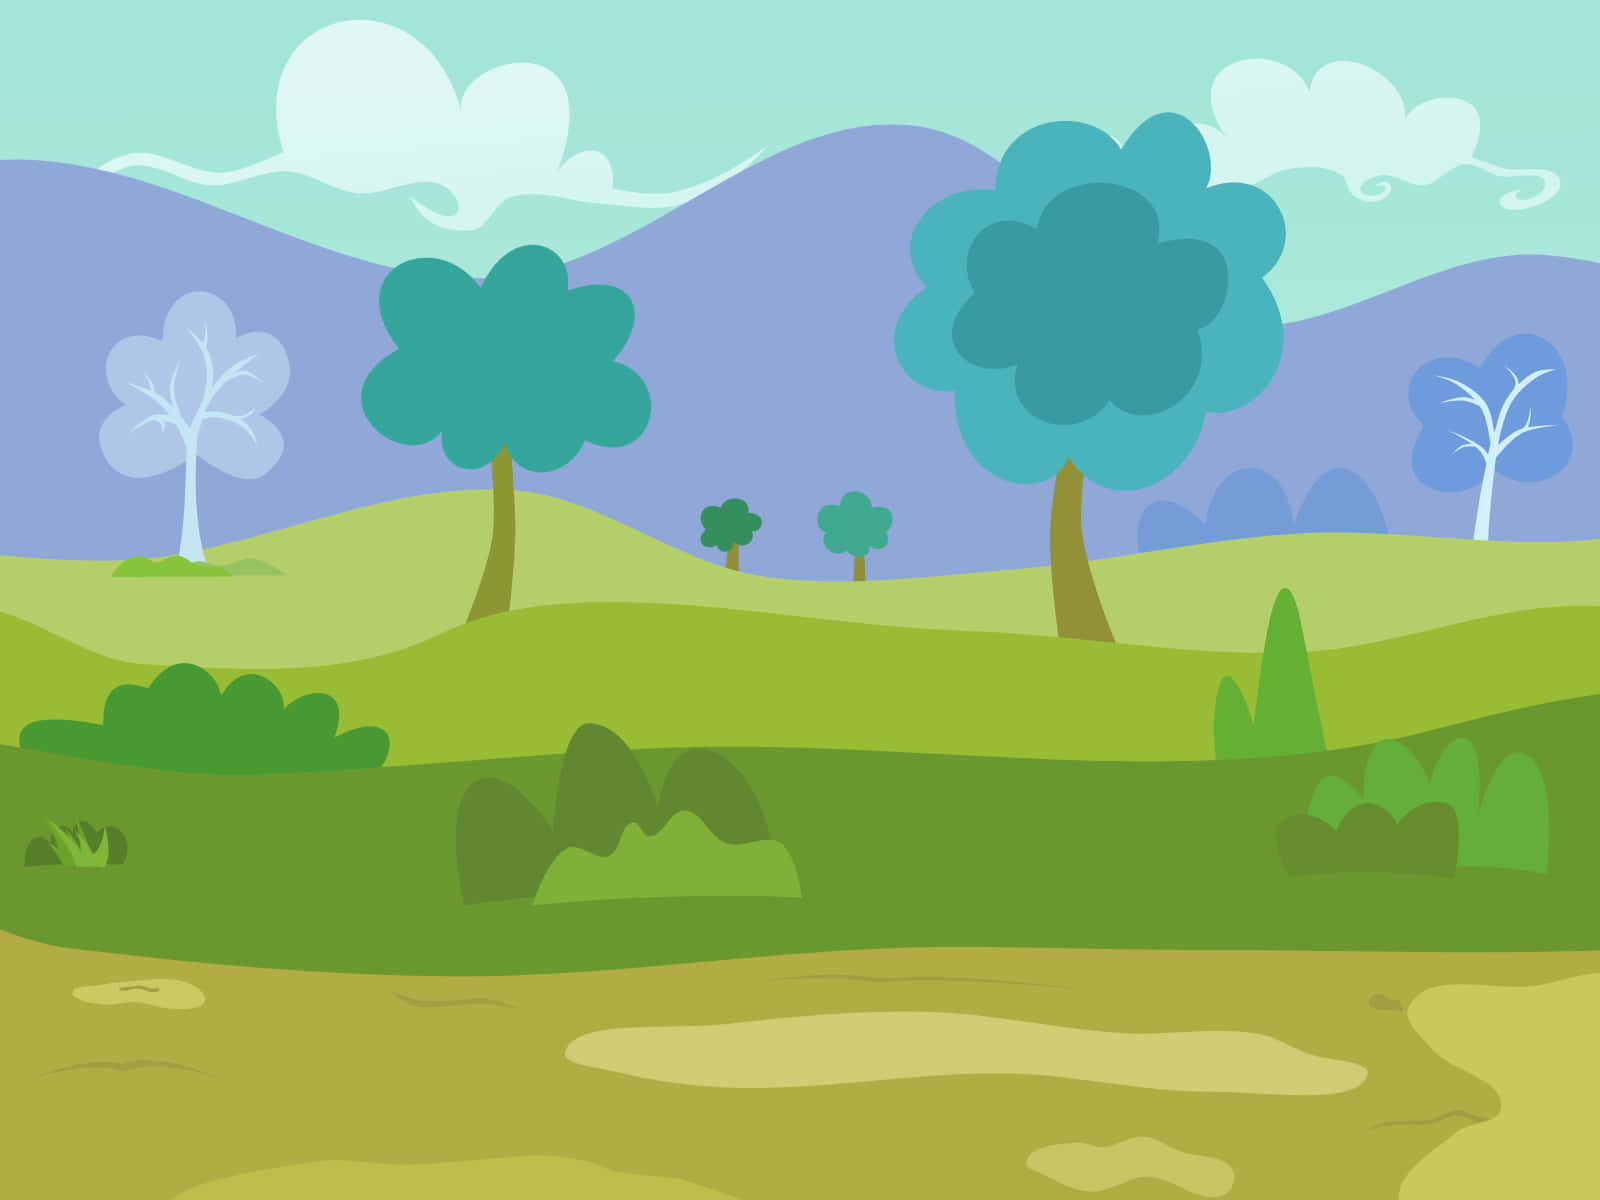 MLP Background Illustrated Cartoon Landscape